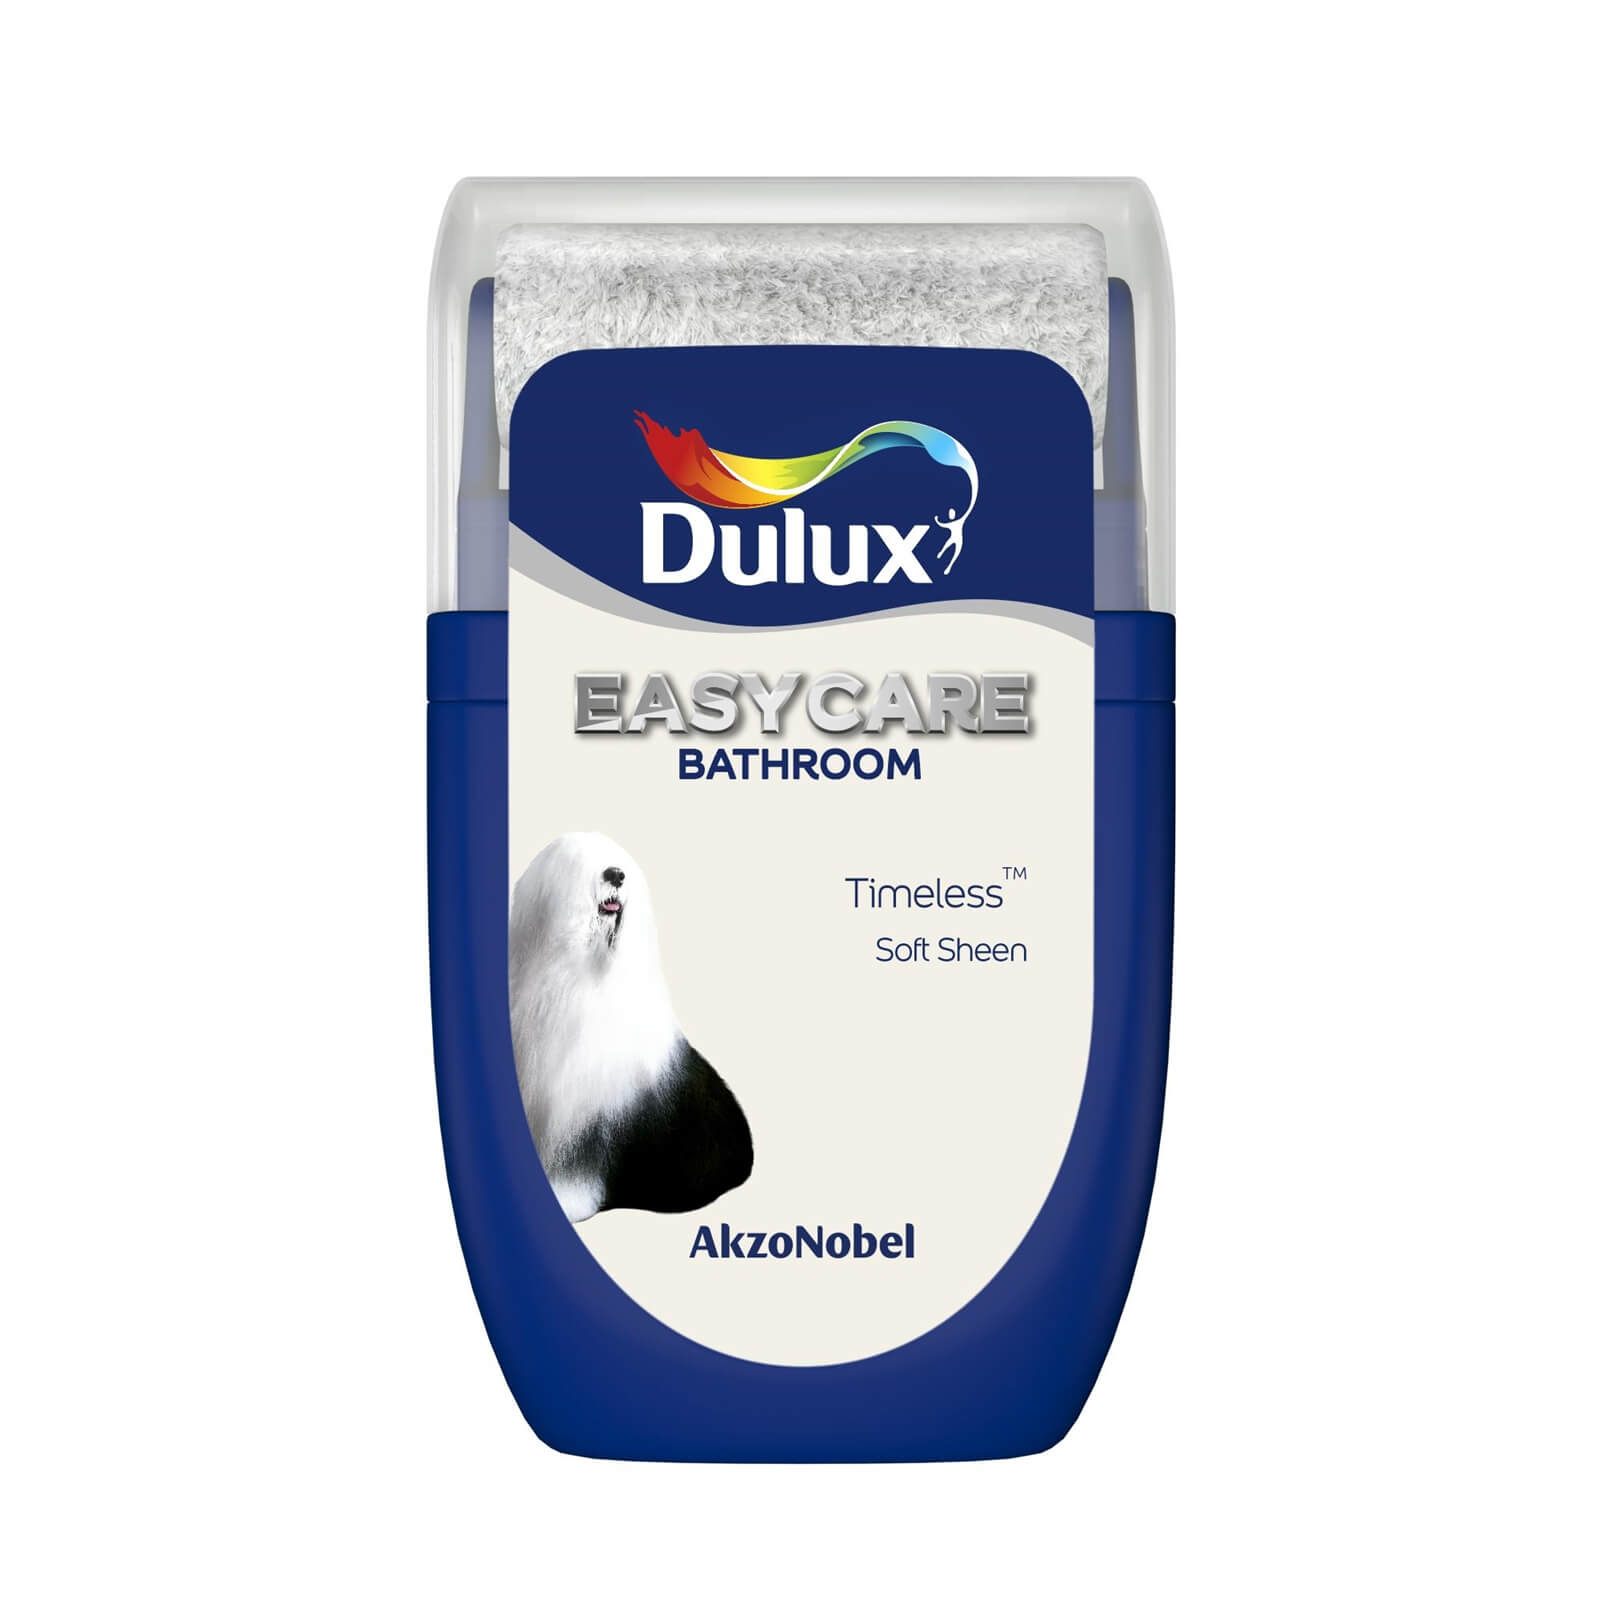 Dulux Easycare Bathroom Timeless Tester Paint - 30ml